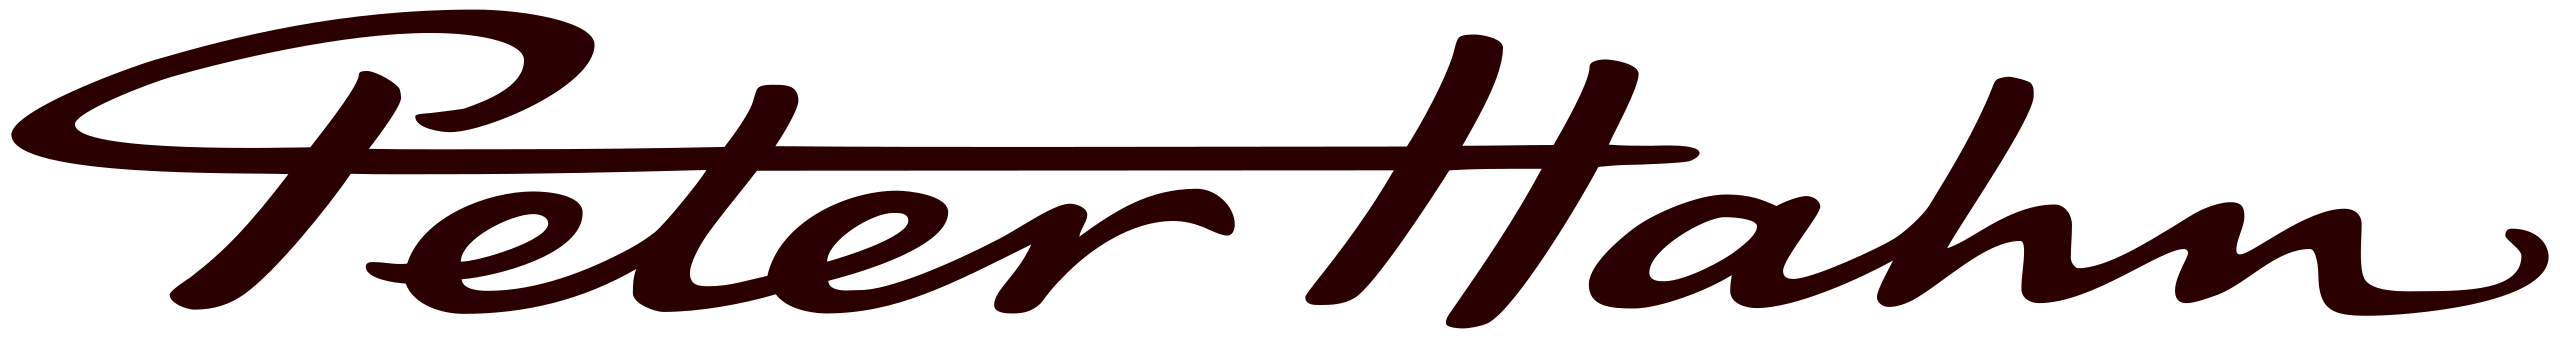 Noodlottig romantisch Mail File:Peter Hahn logo.svg - Wikimedia Commons